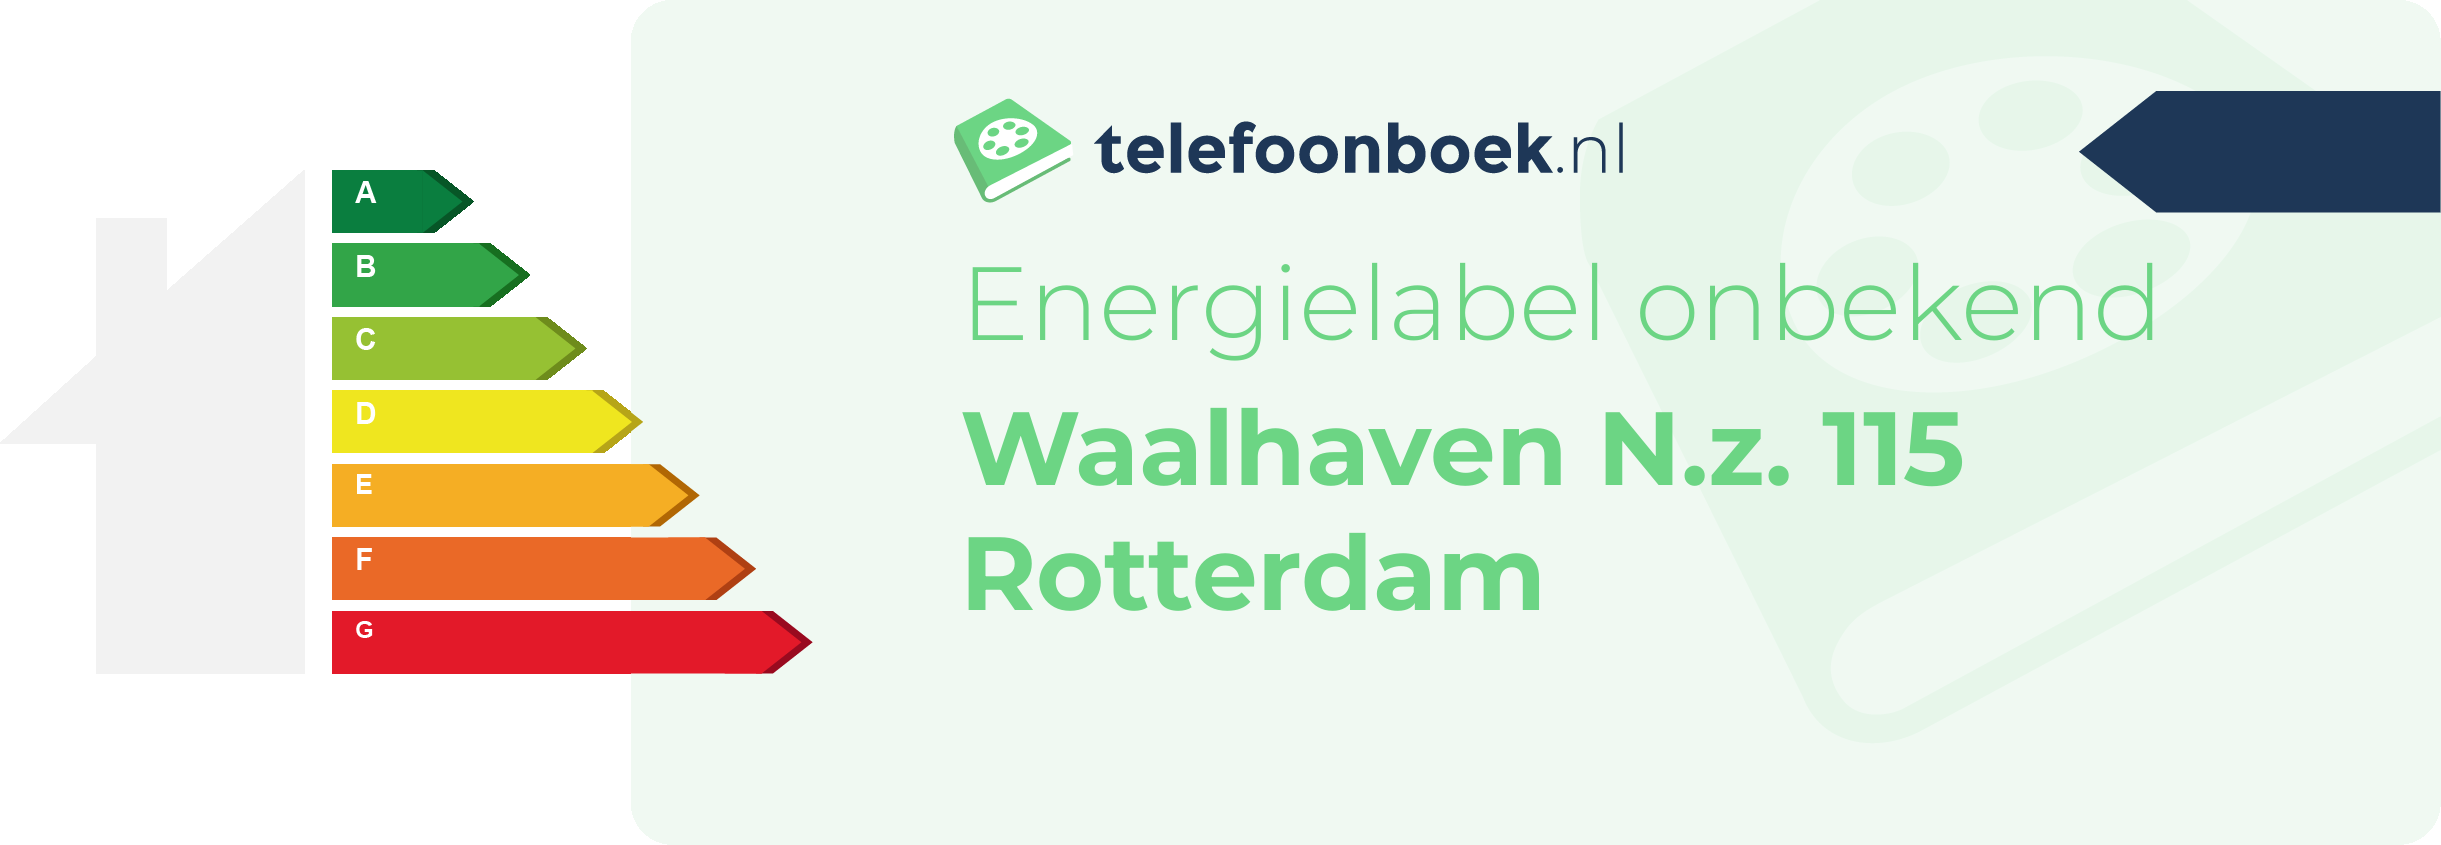 Energielabel Waalhaven N.z. 115 Rotterdam